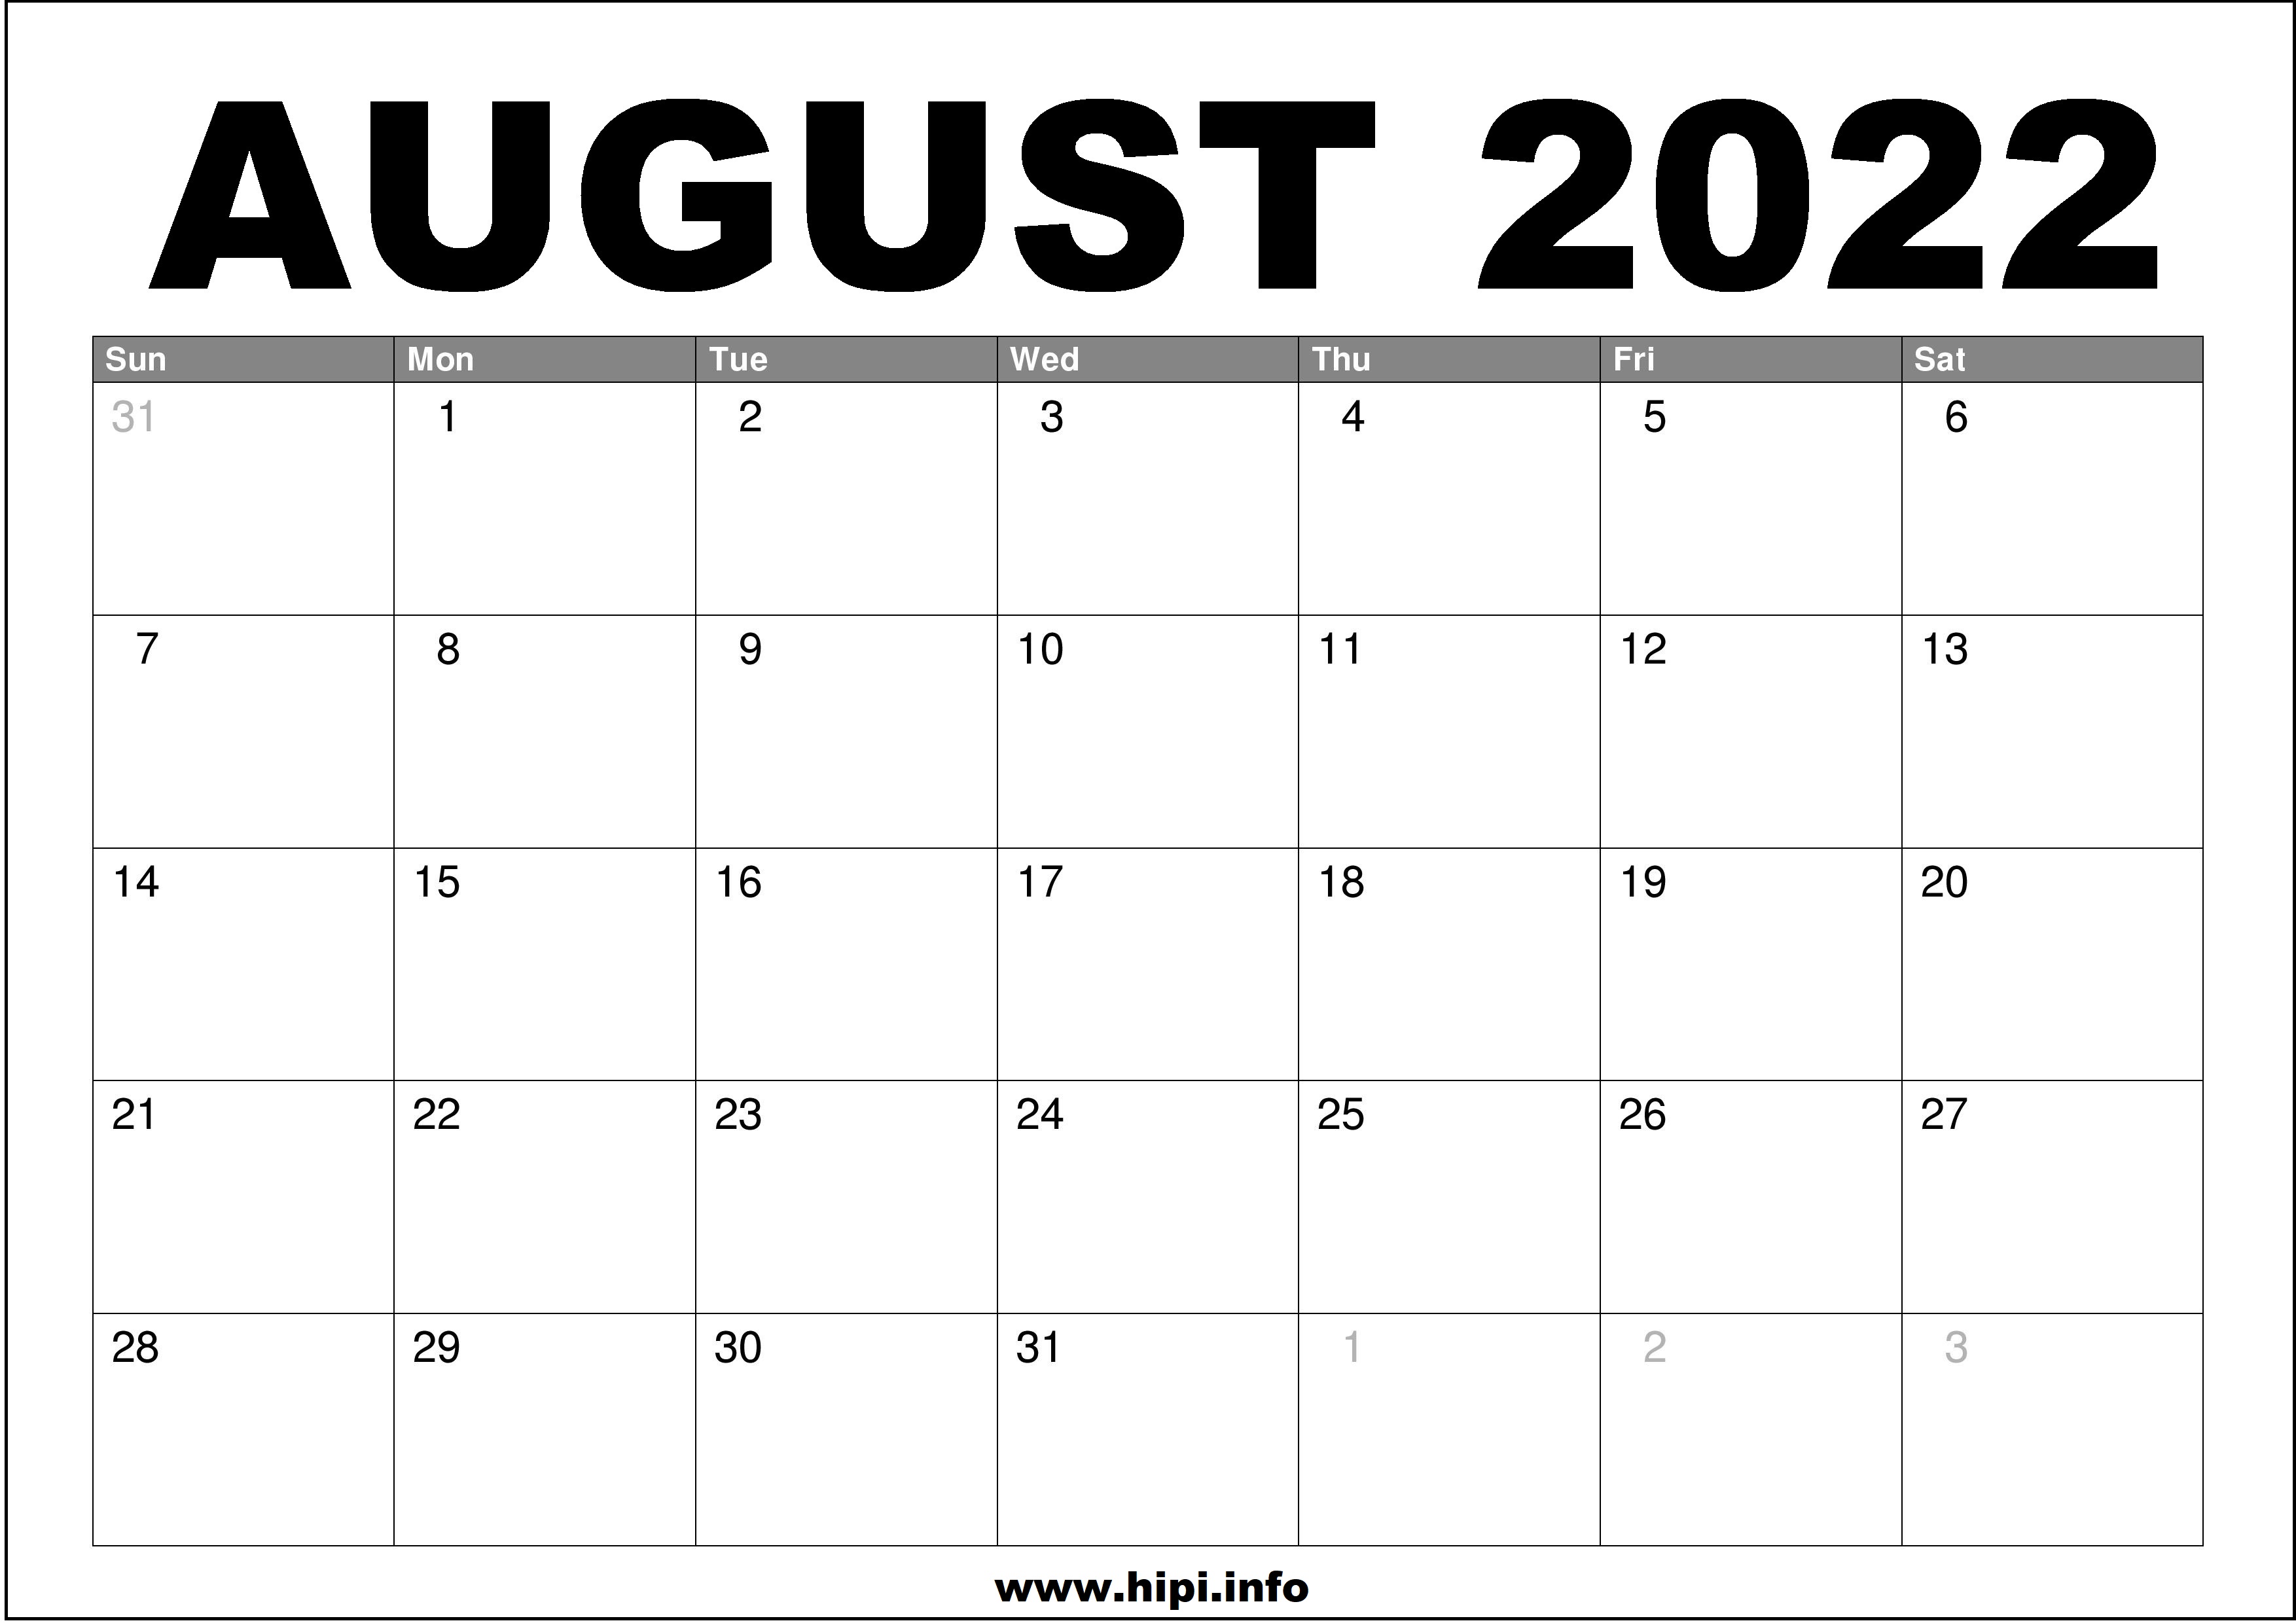 August 2022 Calendar Printable Free Hipi.info